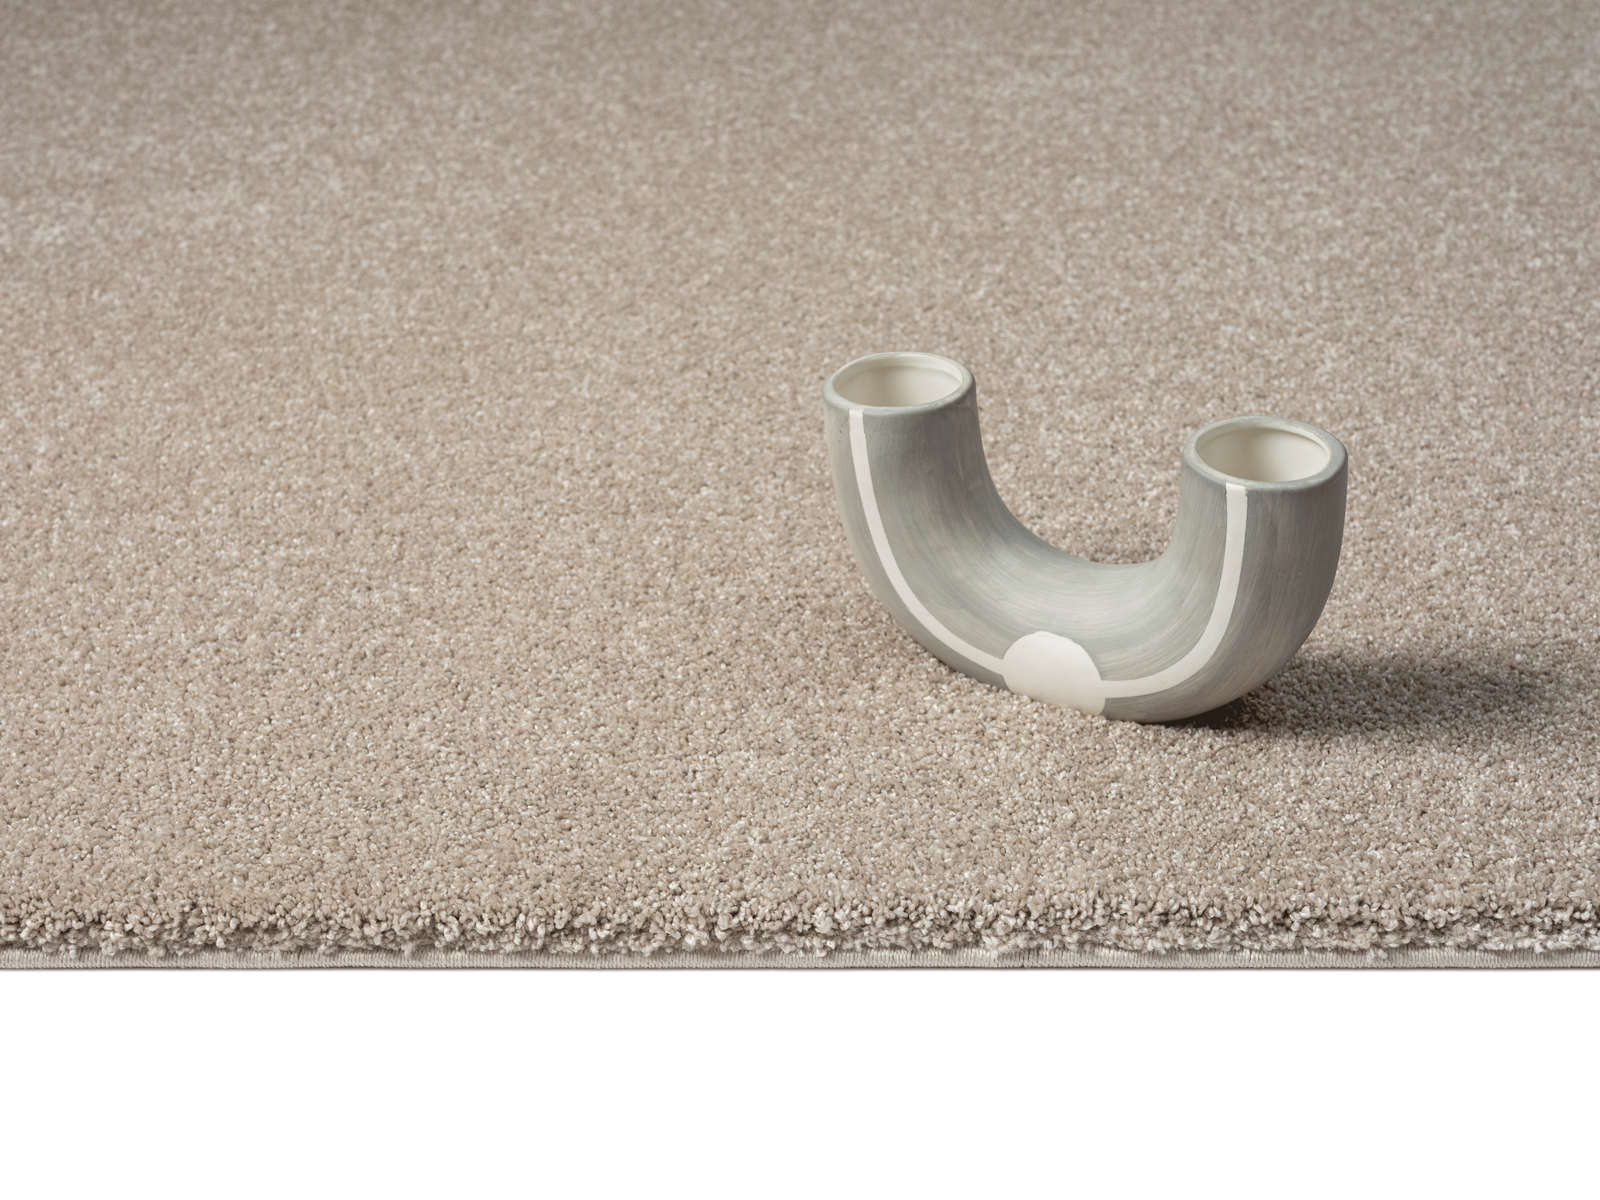             Soft short pile carpet in beige - 230 x 160 cm
        